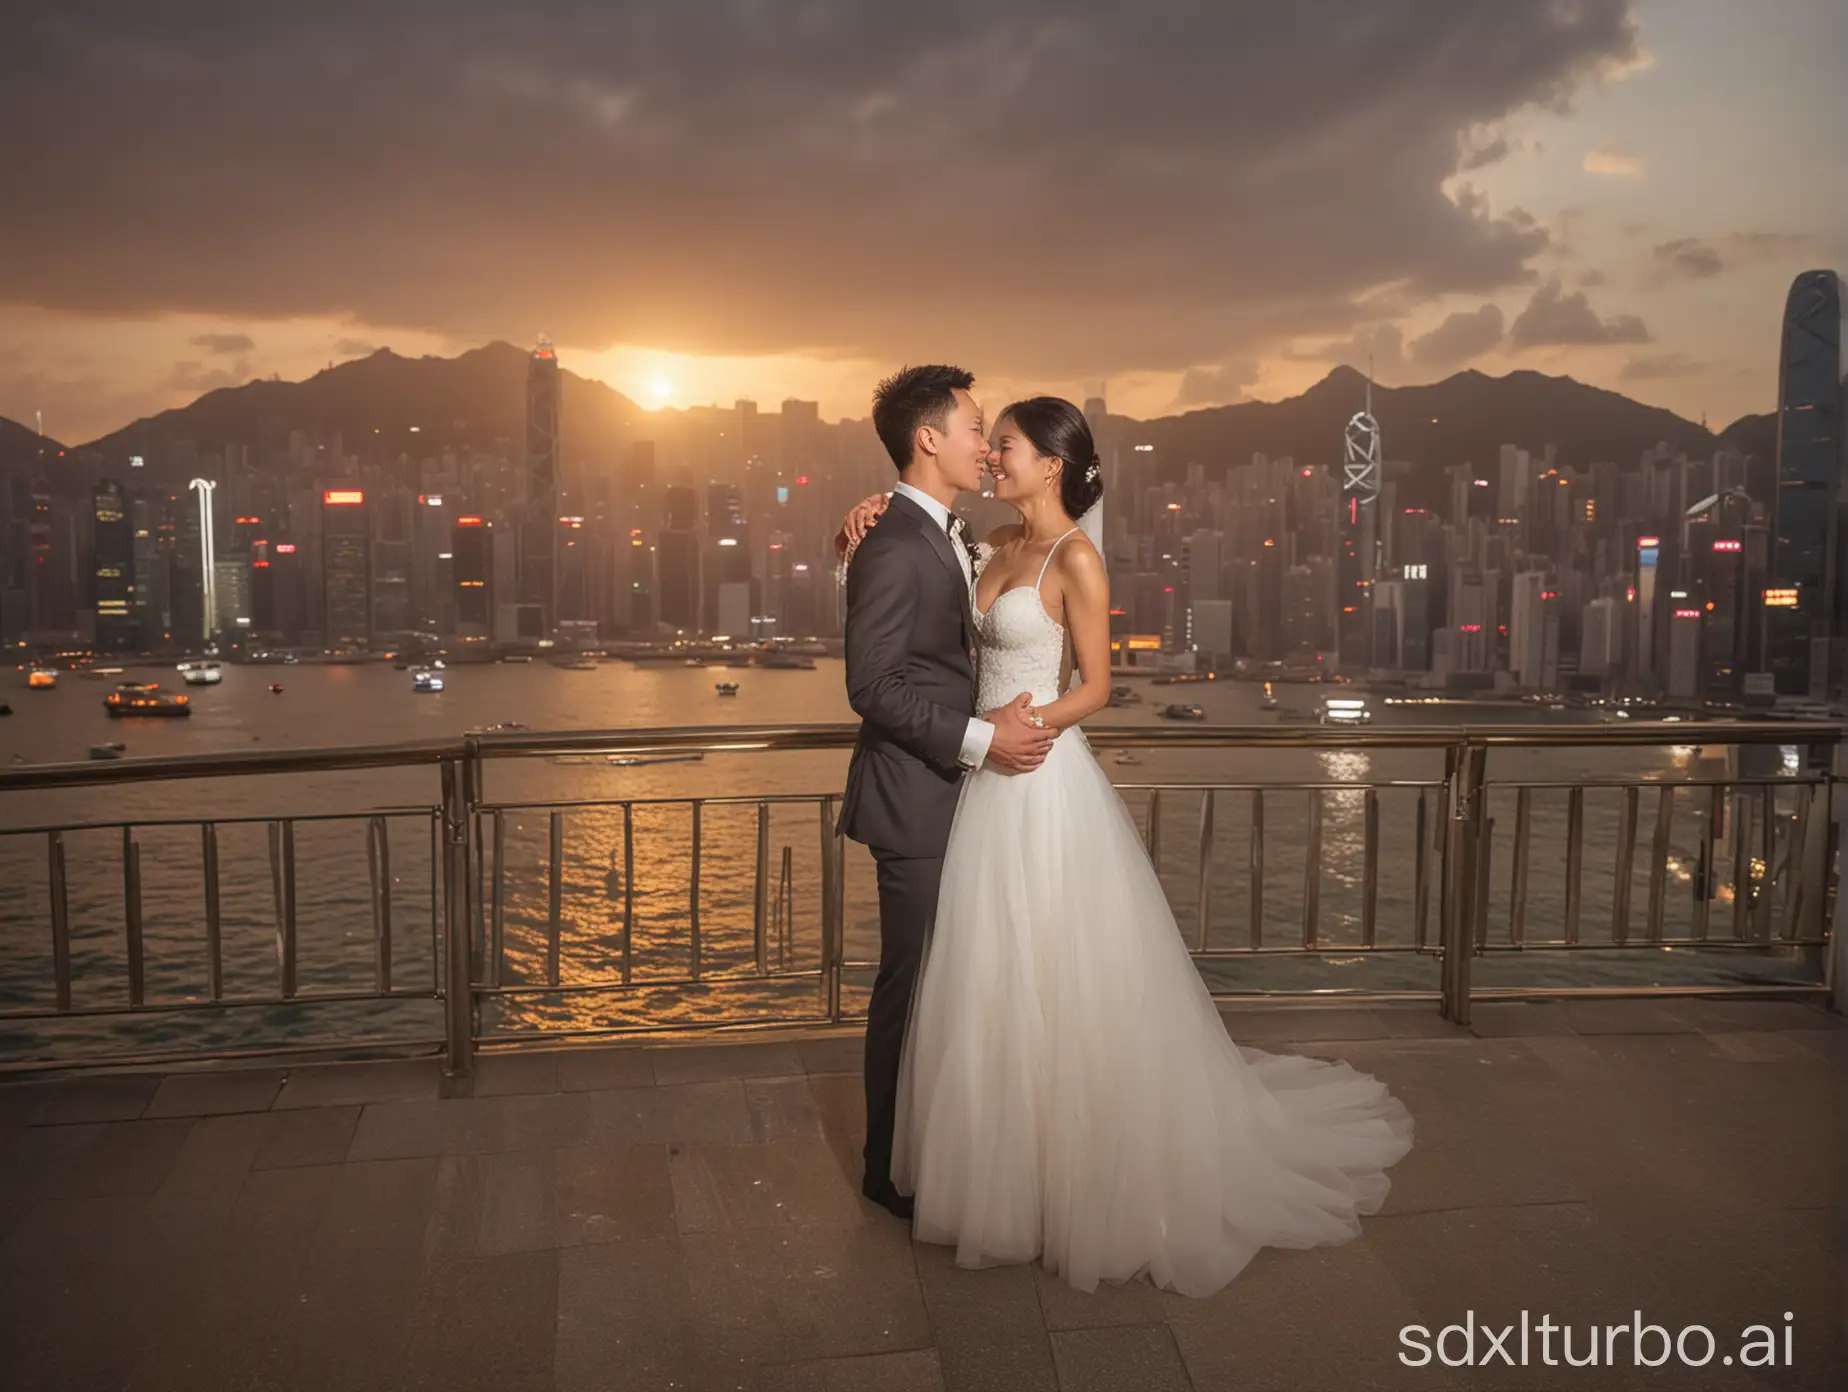 Newlyweds-Celebrating-in-Hong-Kong-Central-at-Sunset